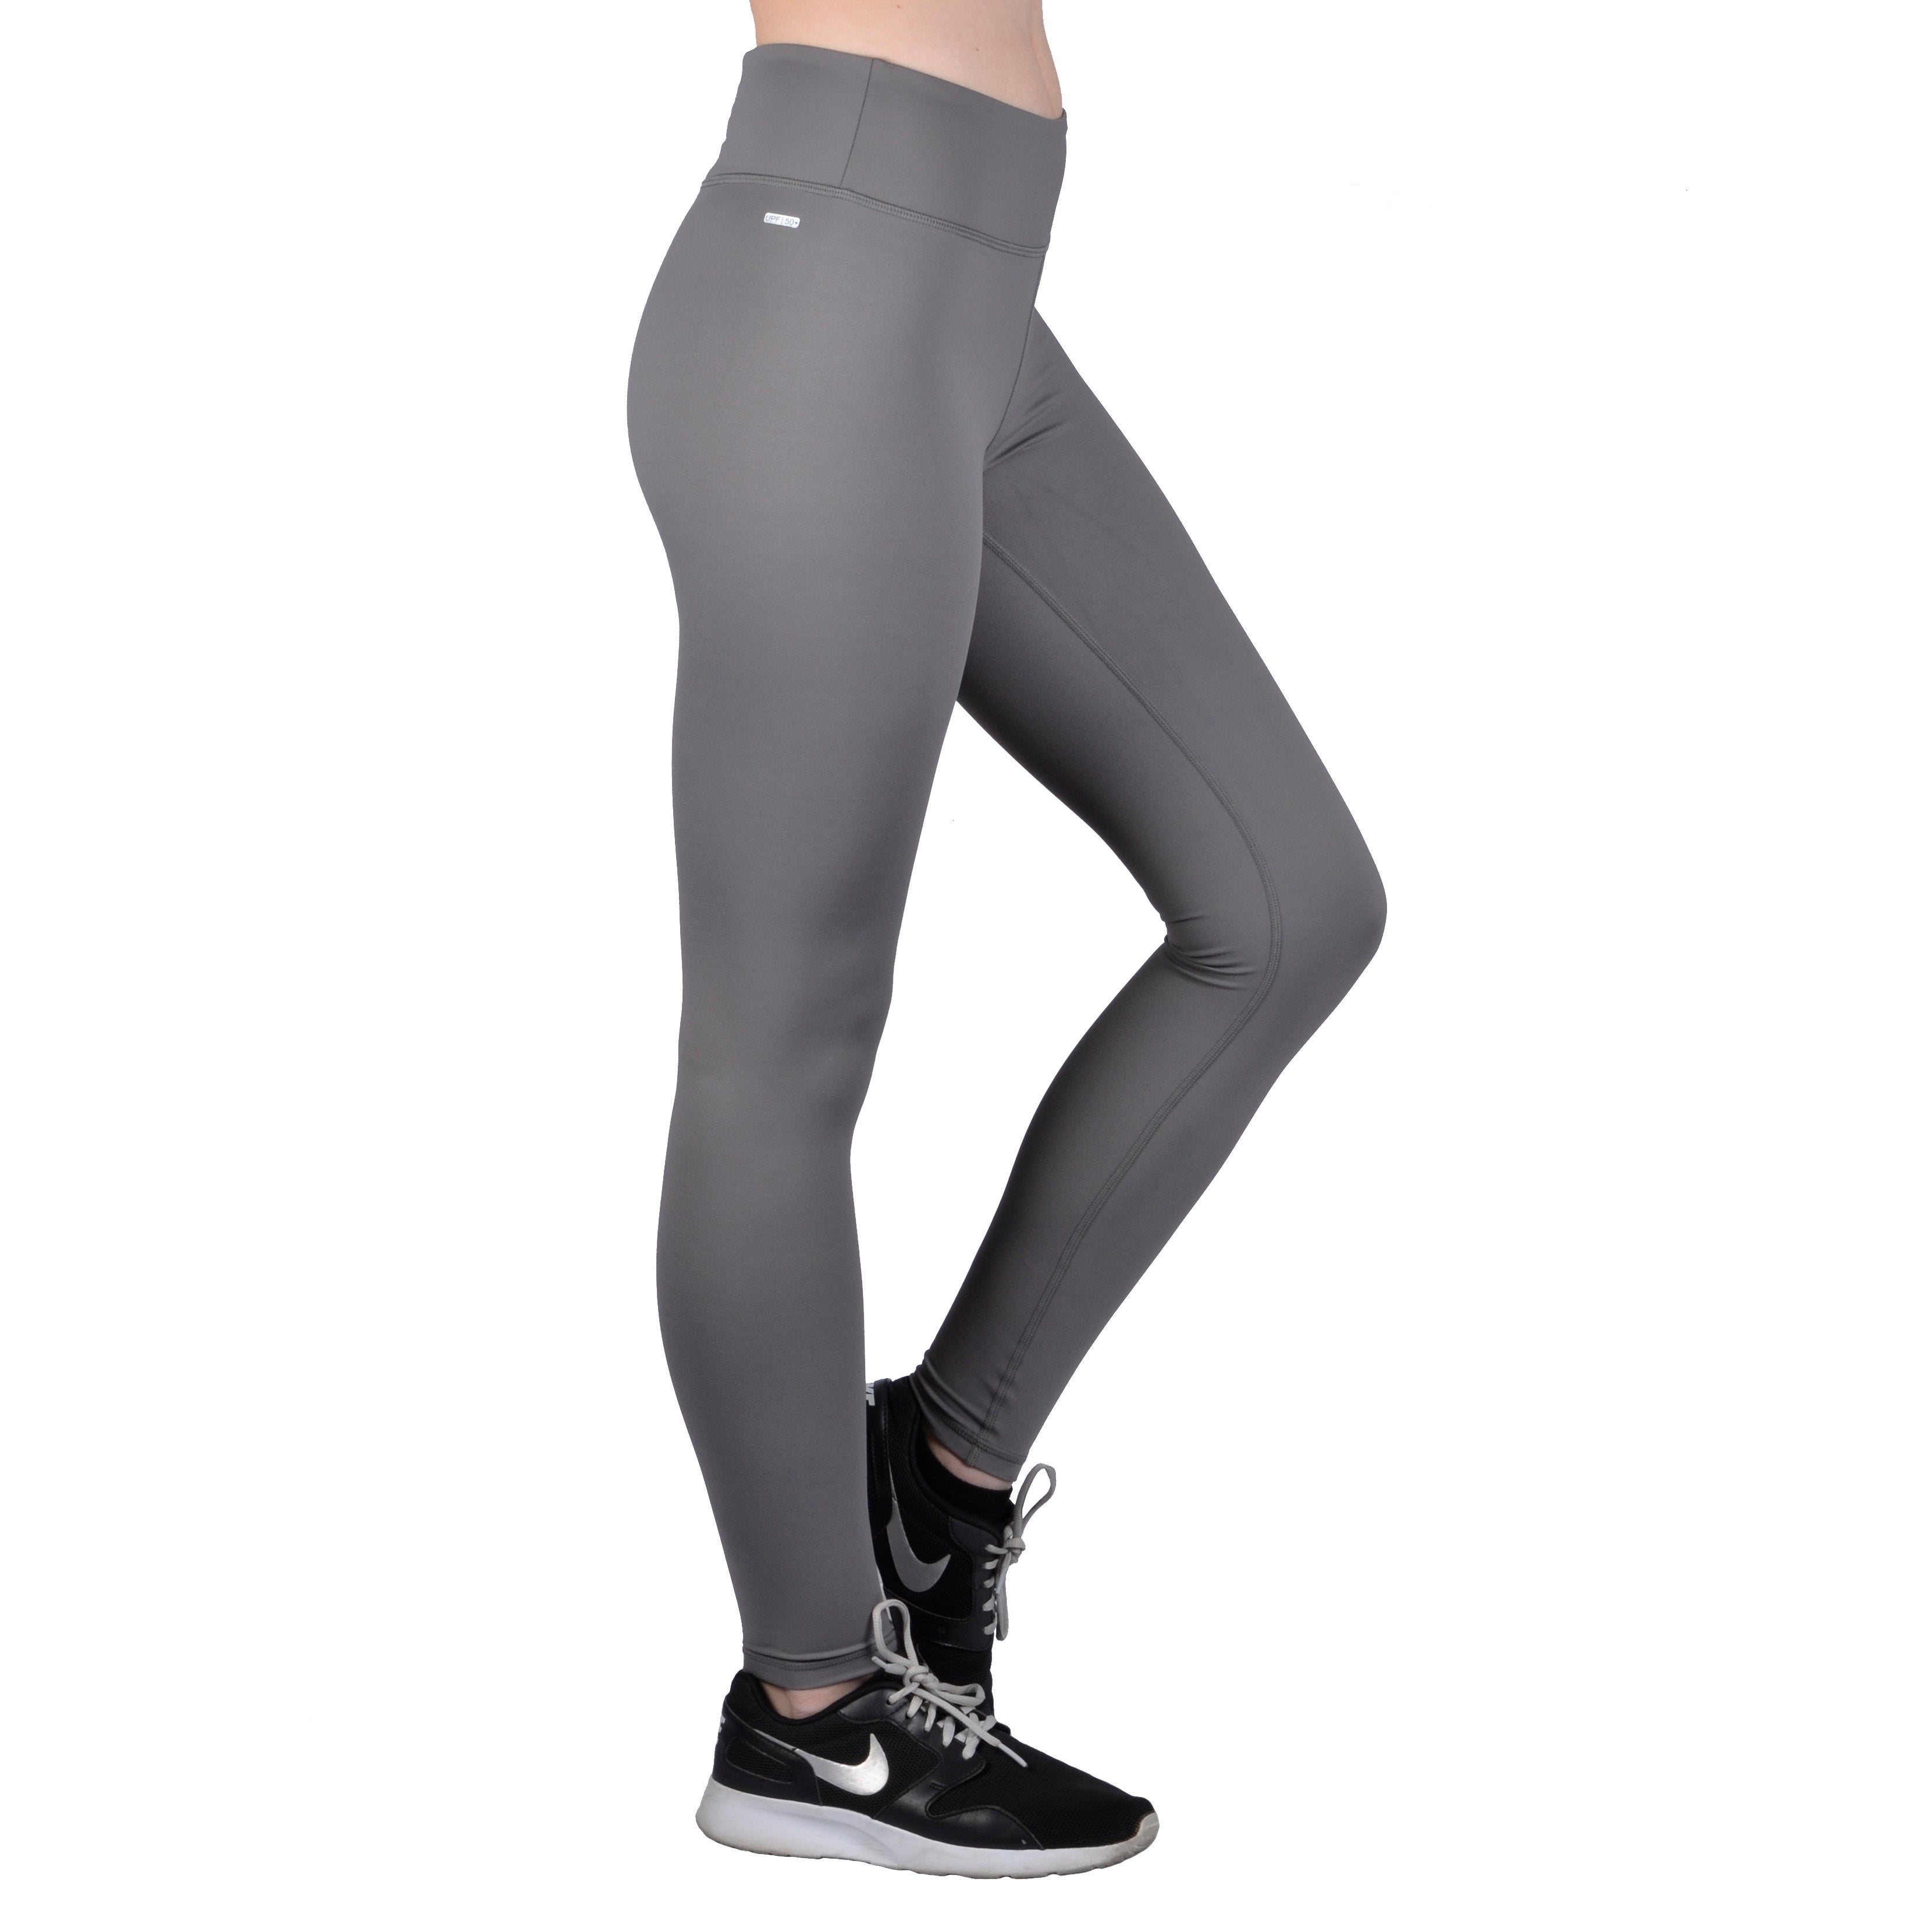 New Mix Compression Leggings Women's Athletic Athleisure Workout Wear Sz Lg/ XL